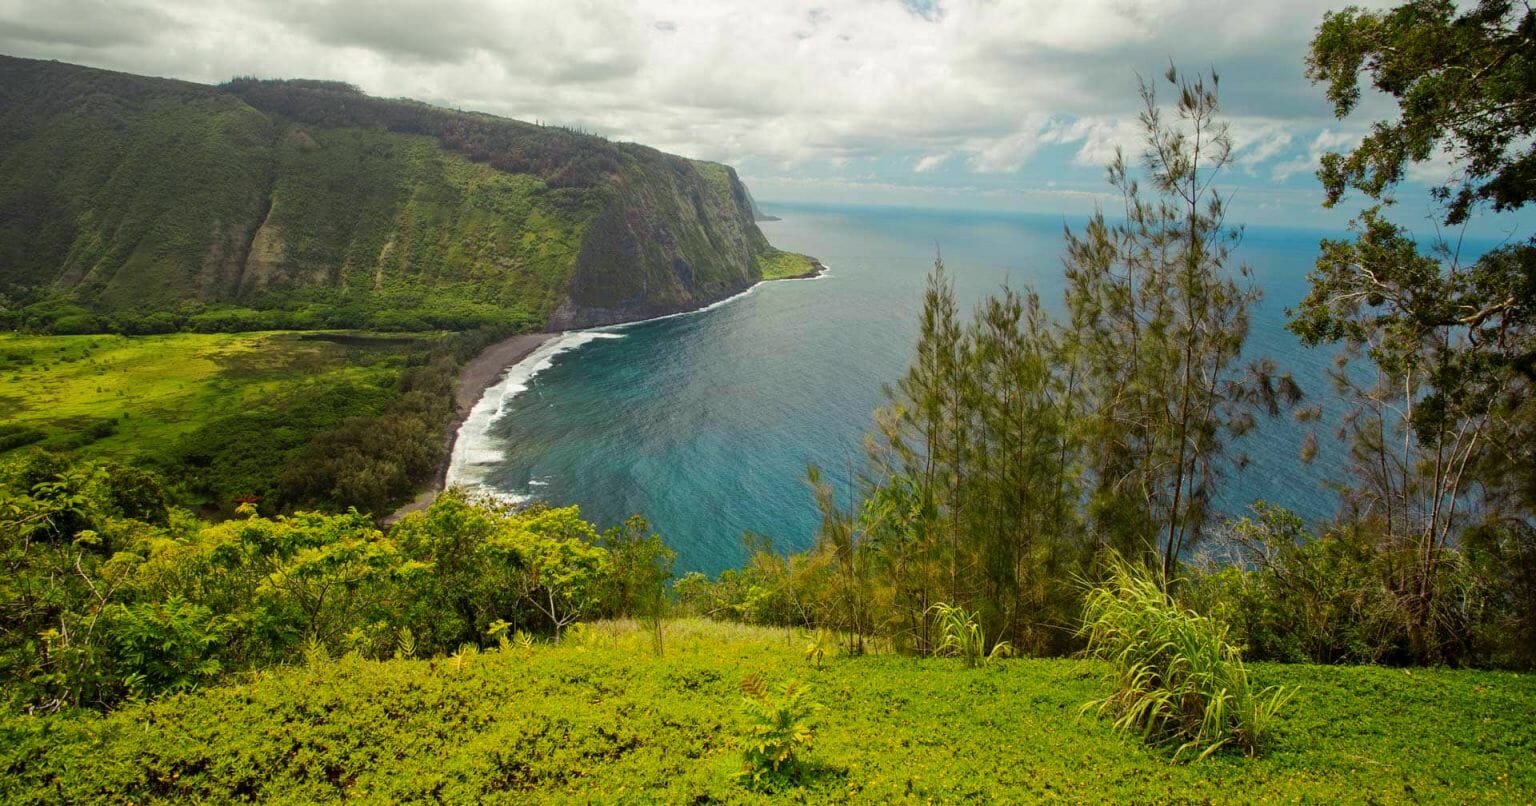 Travel Club Announces Hawaii InterIsland Cruise Cumberland Valley